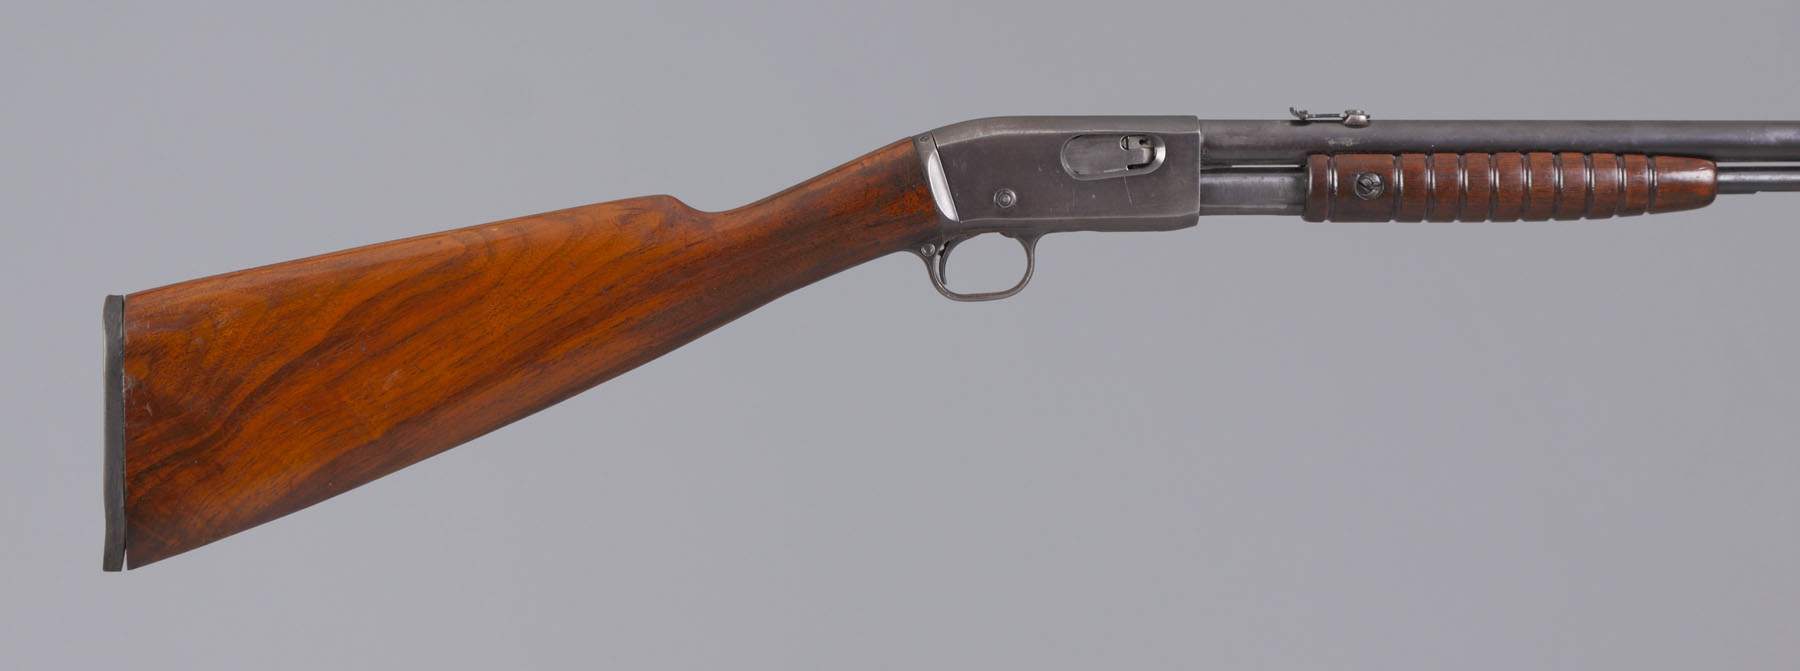 remington model 12 serial number is 548242